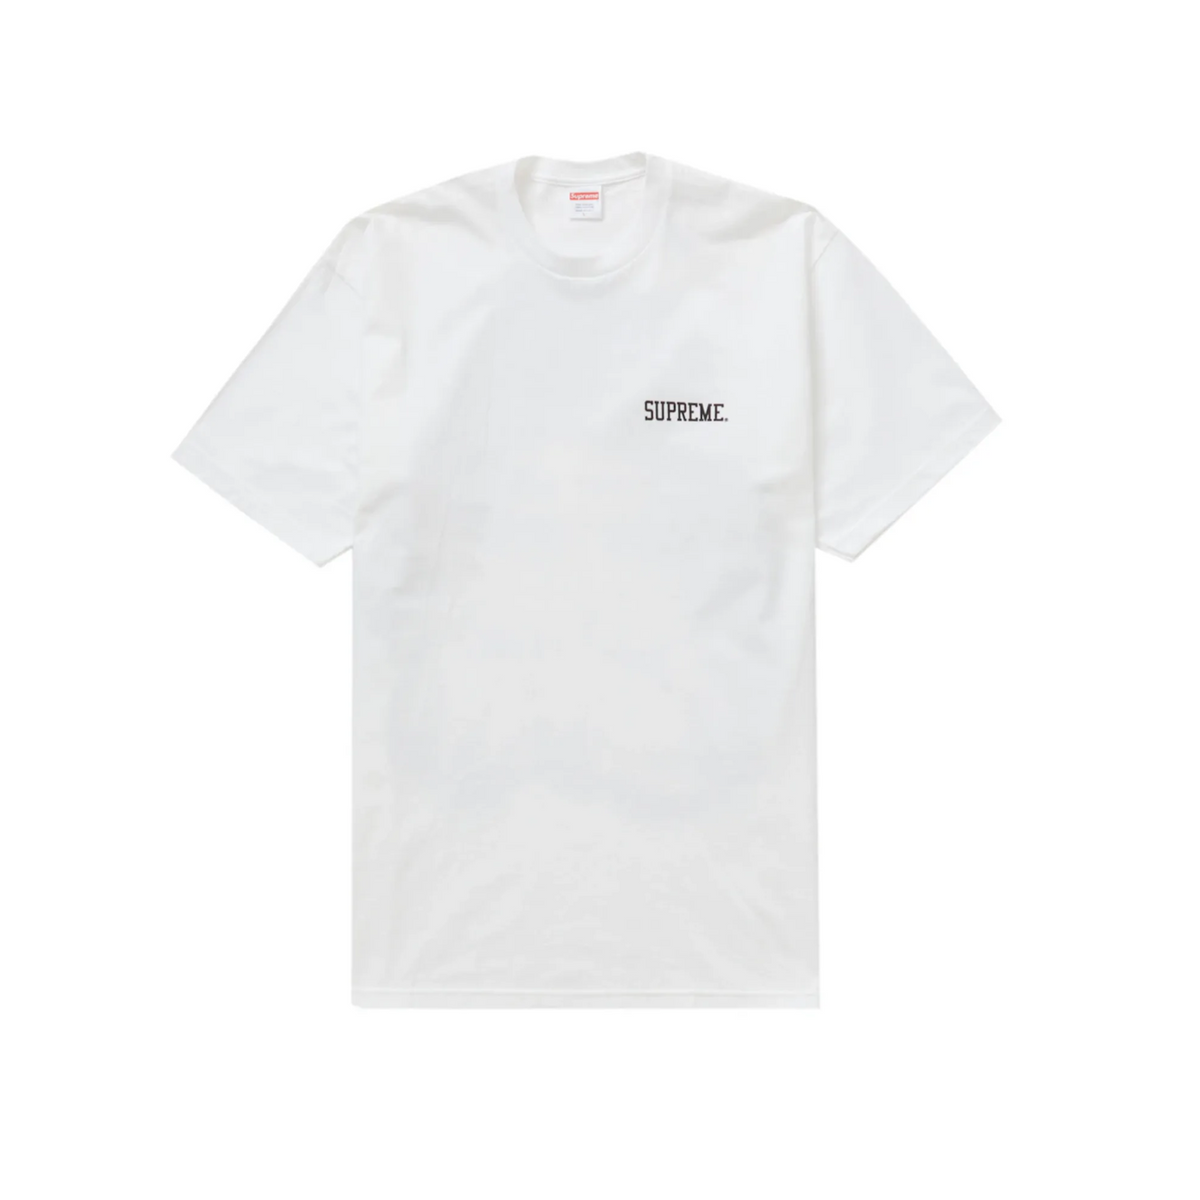 Supreme Fighter T-shirt "White"